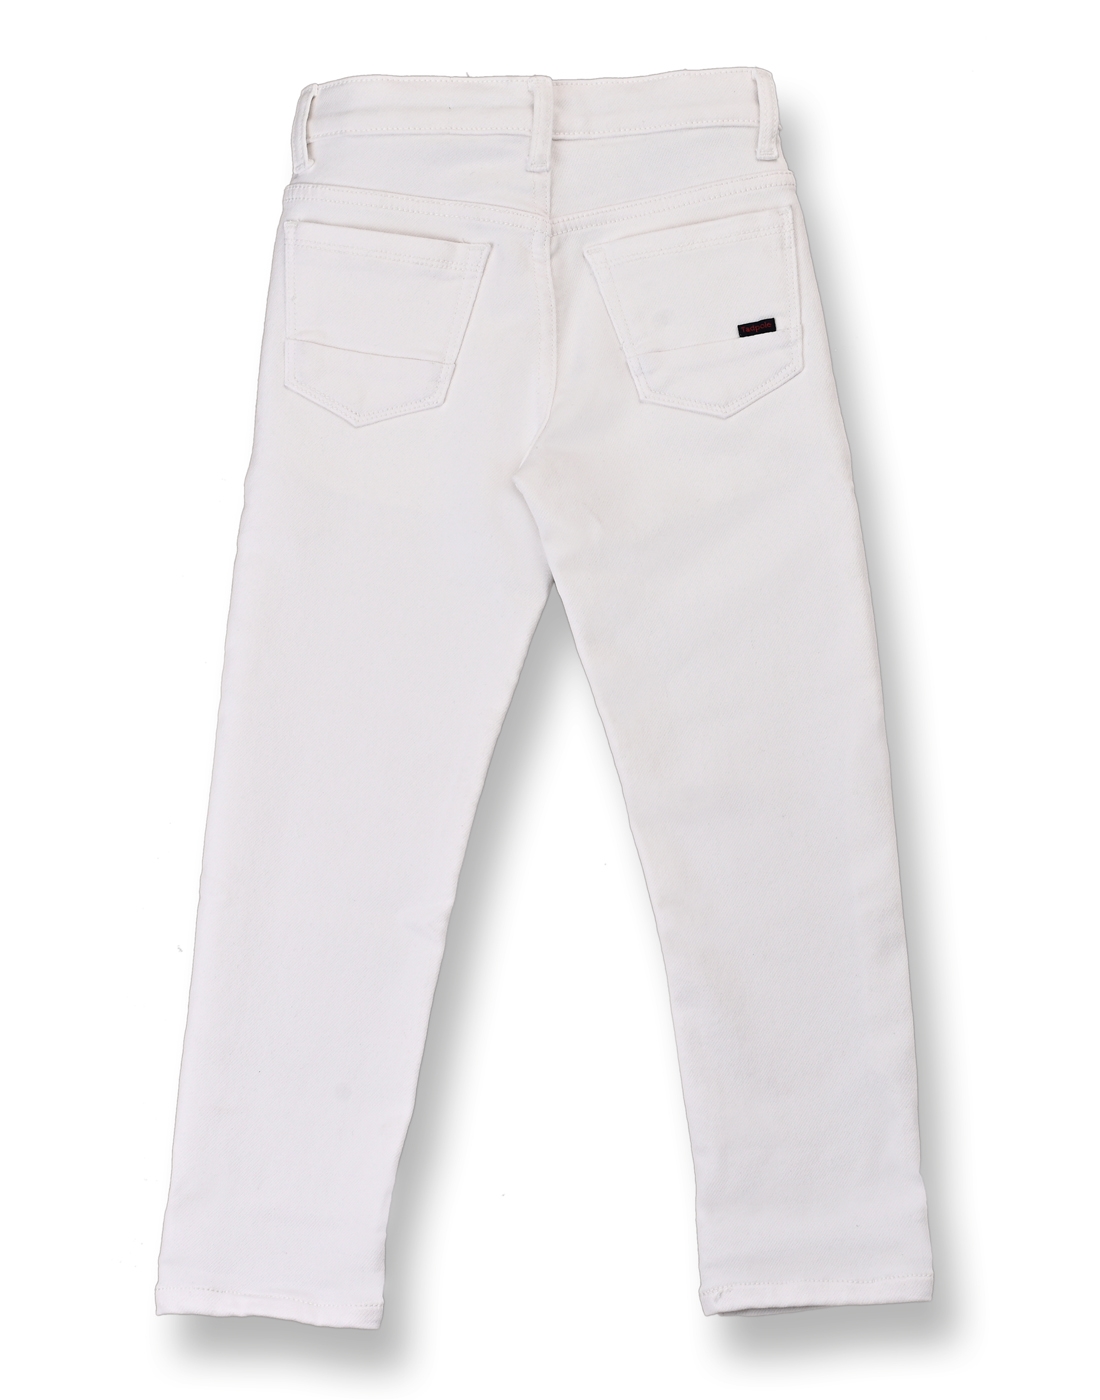 Tadpole | Tadpole Boy's White Denim Solid Jeans 1